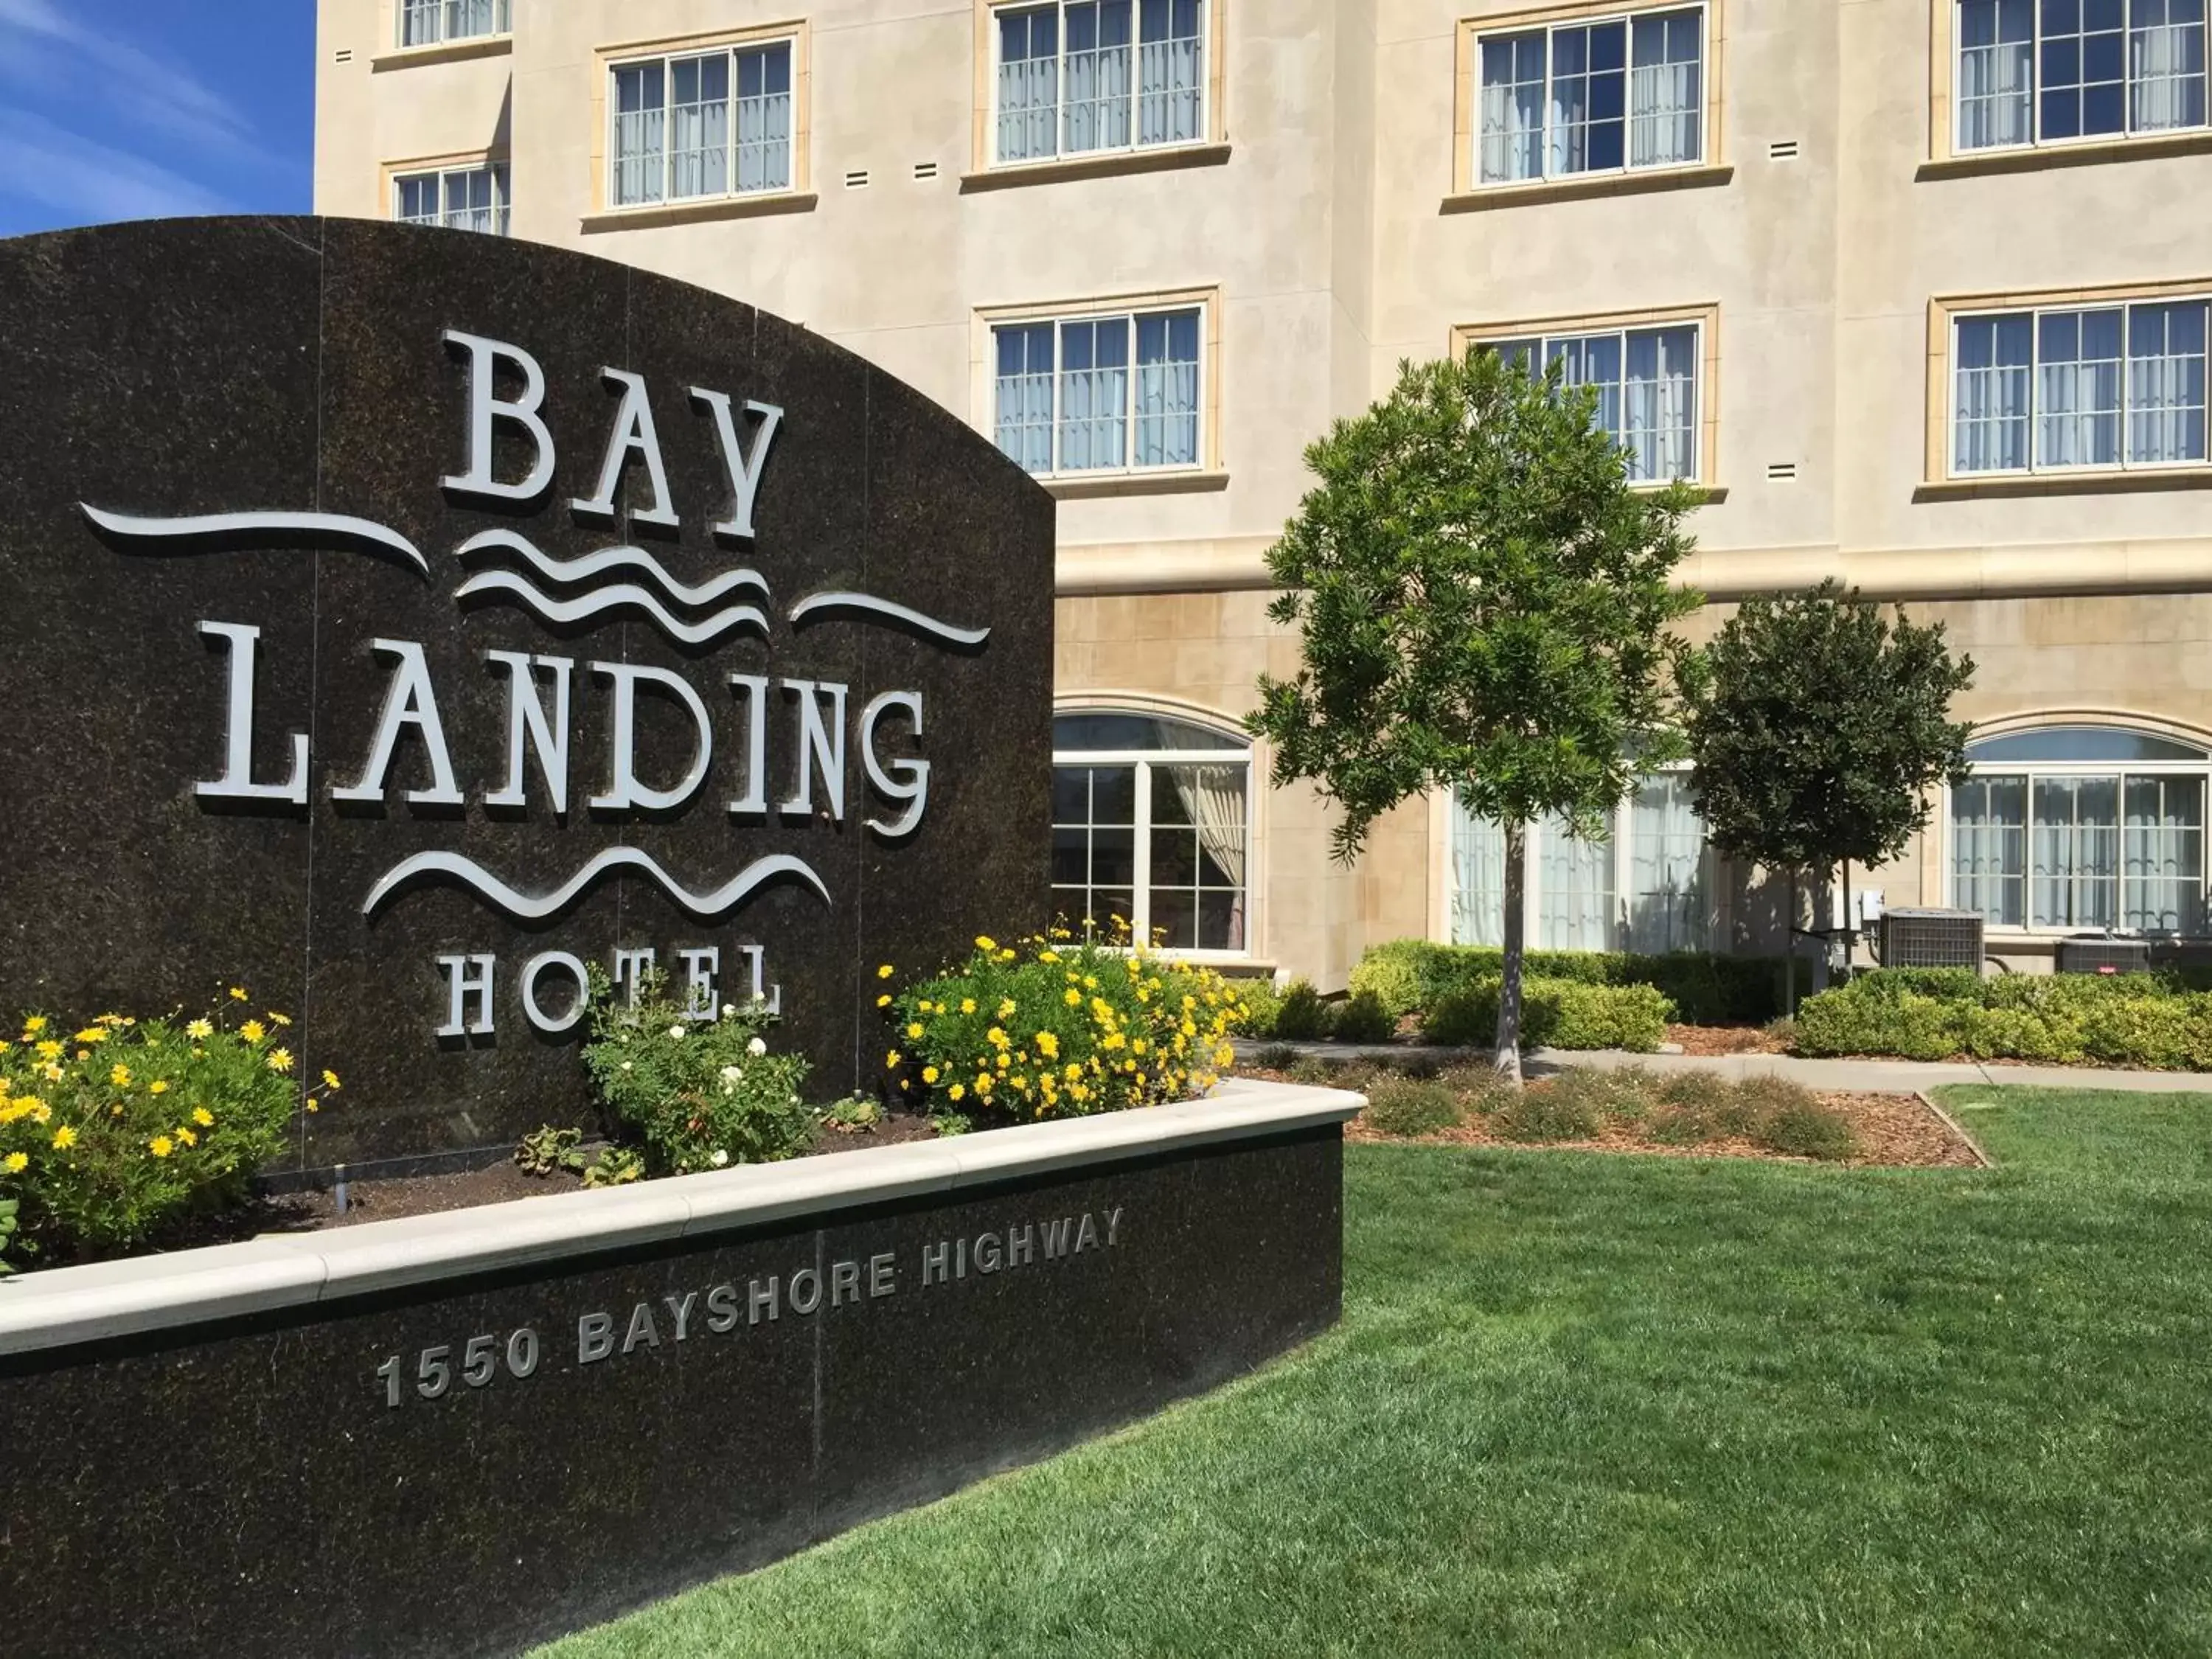 Property logo or sign in Bay Landing Hotel